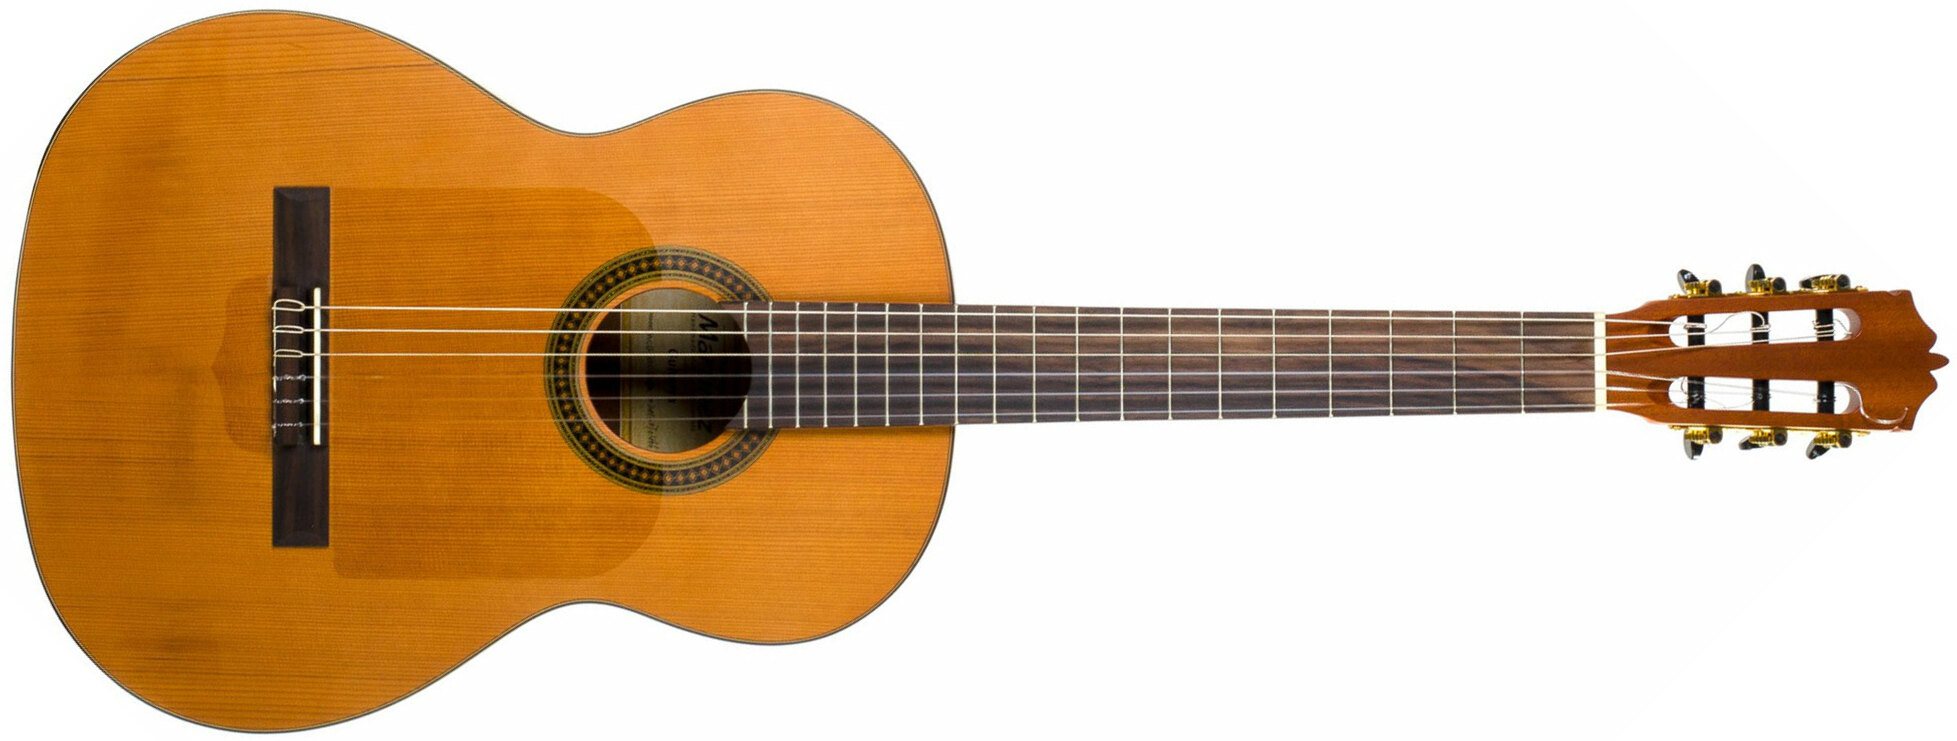 Martinez Mc-35c Cedre Sapele Rw - Natural Satin - Classical guitar 4/4 size - Main picture